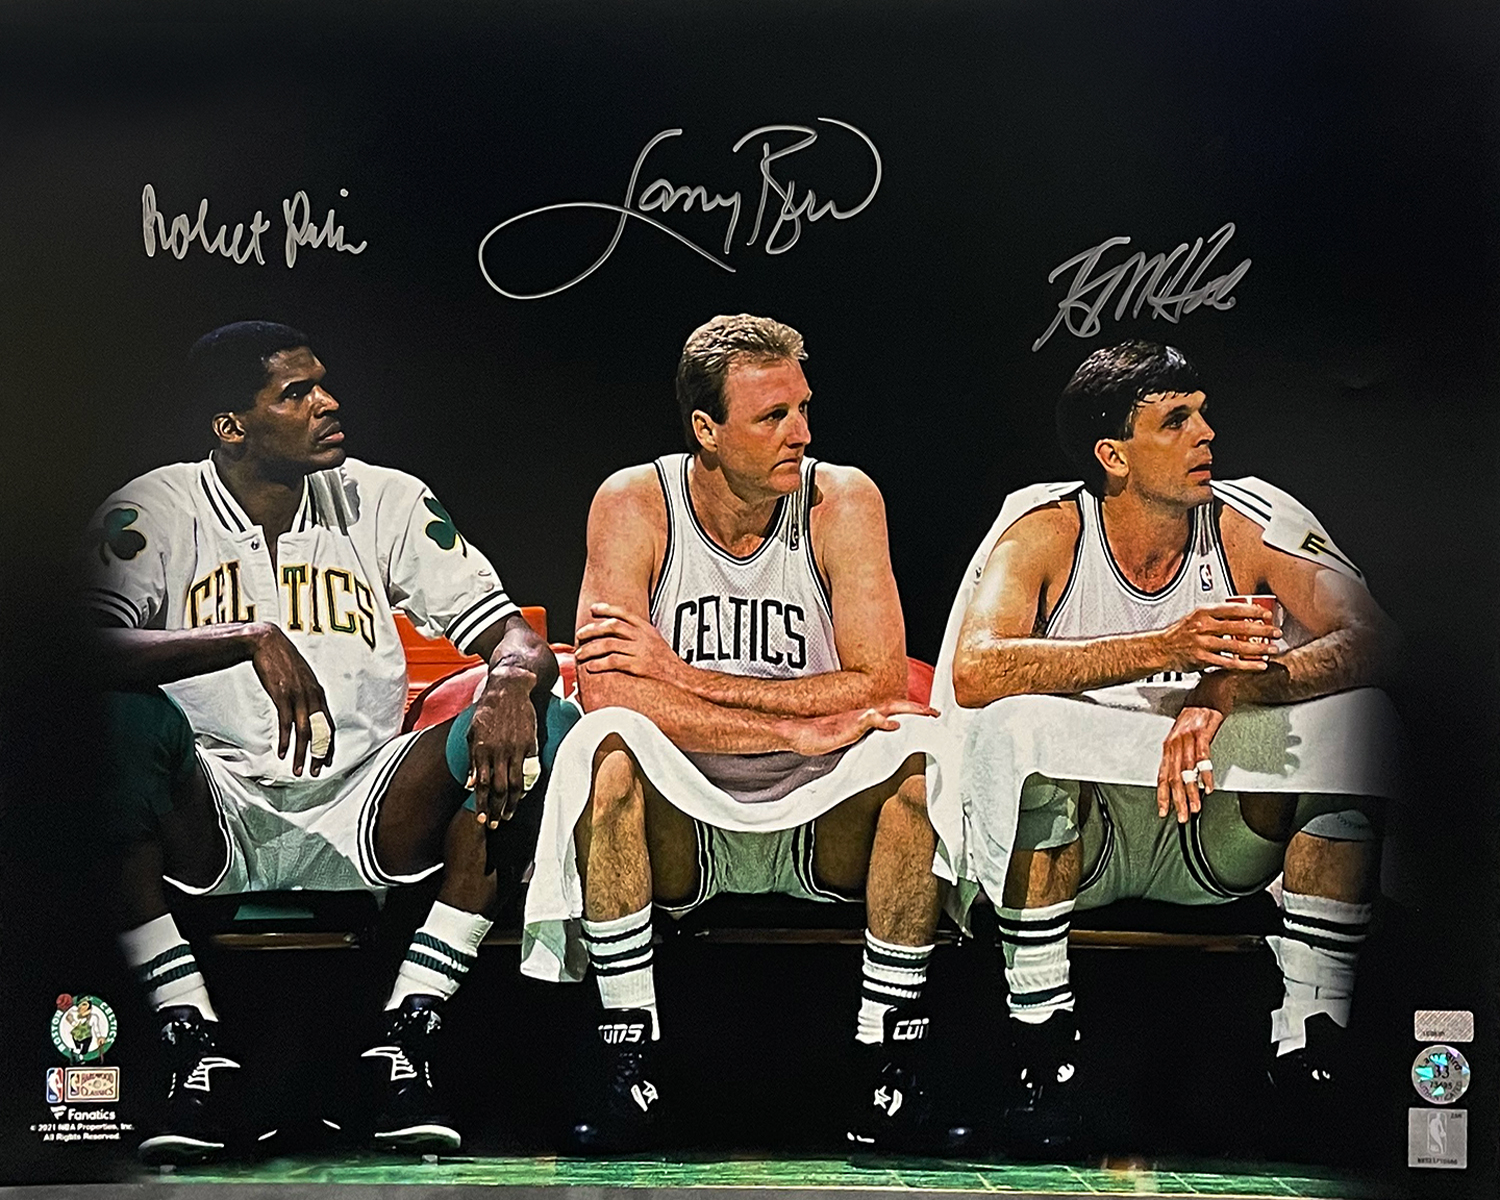 Larry Bird Autographed Boston Celtics White Custom Basketball